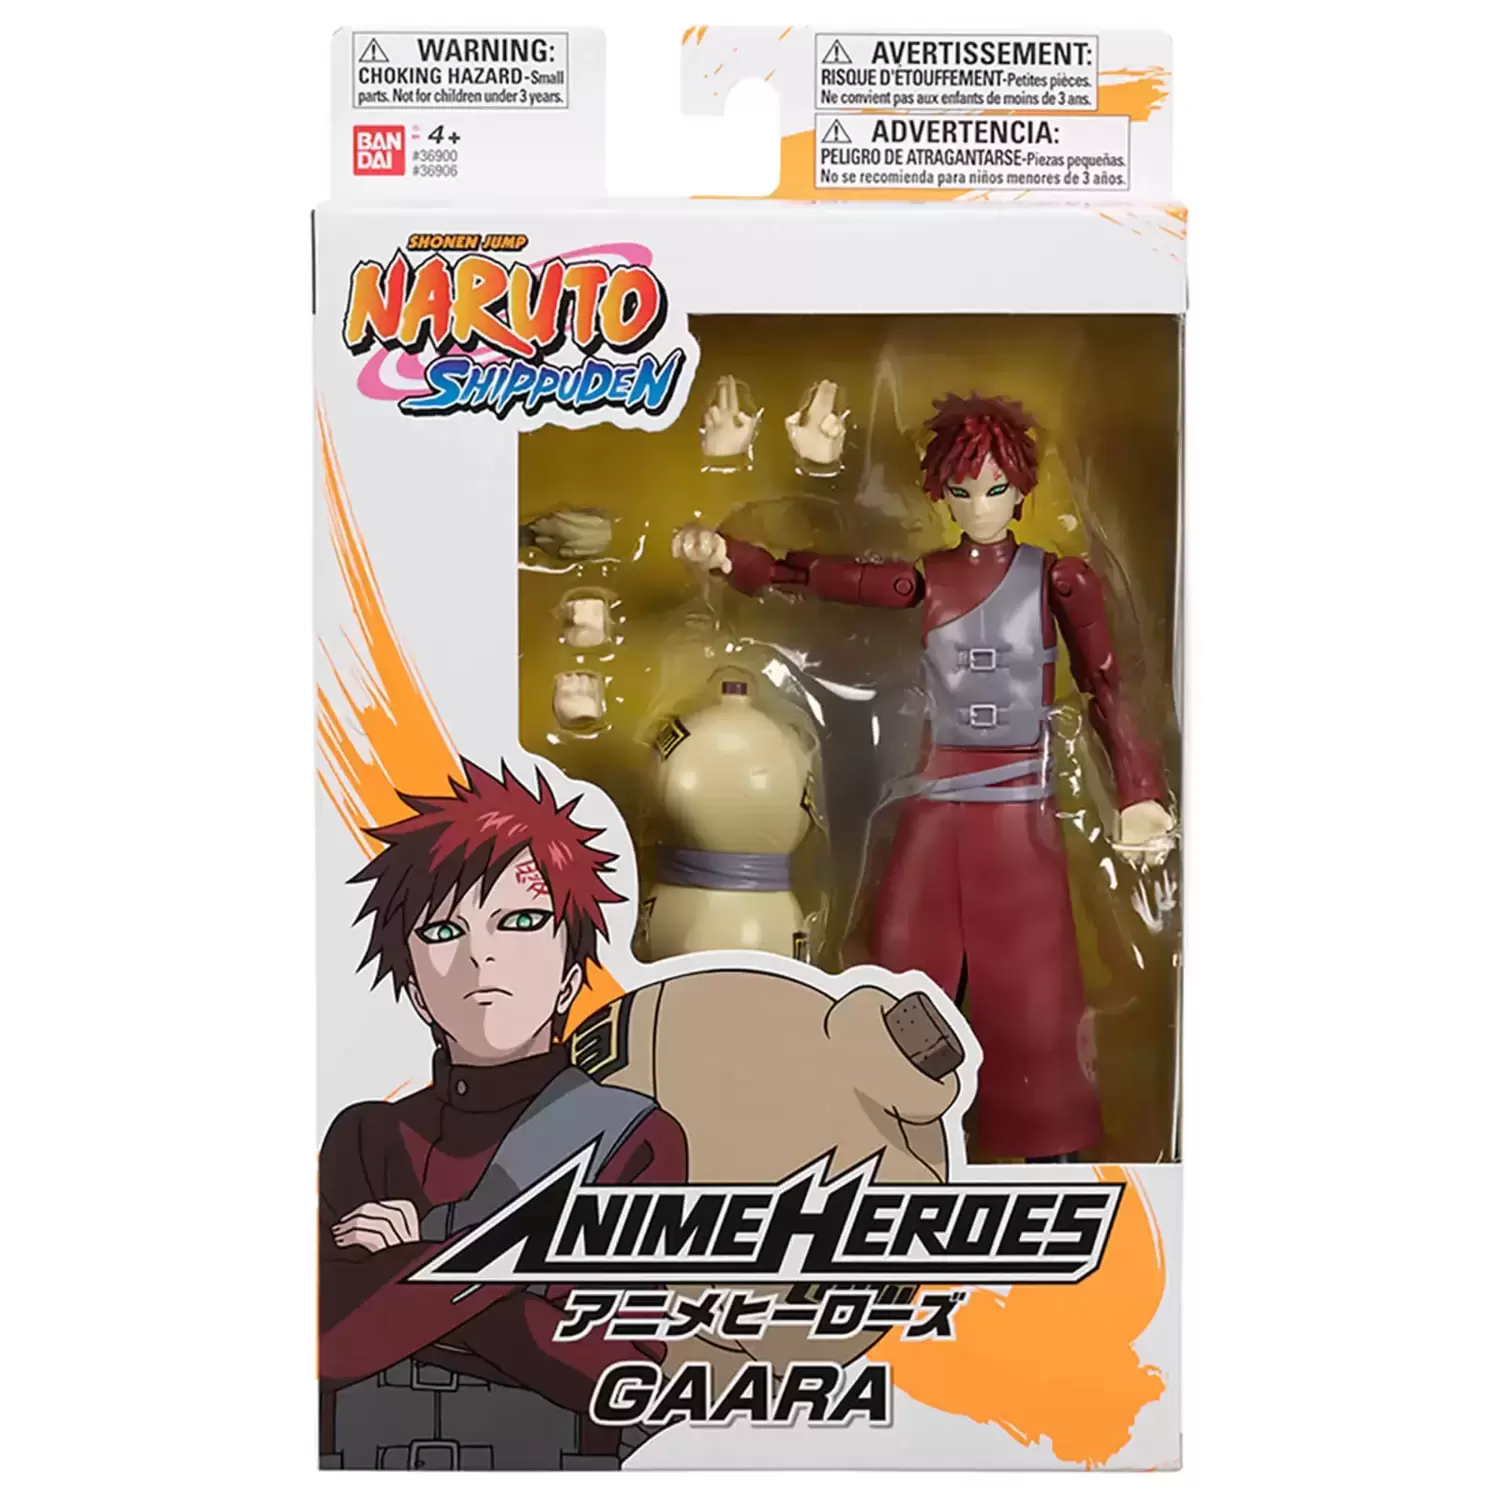 Anime Heroes - Bandai - Naruto Shippuden - Gaara